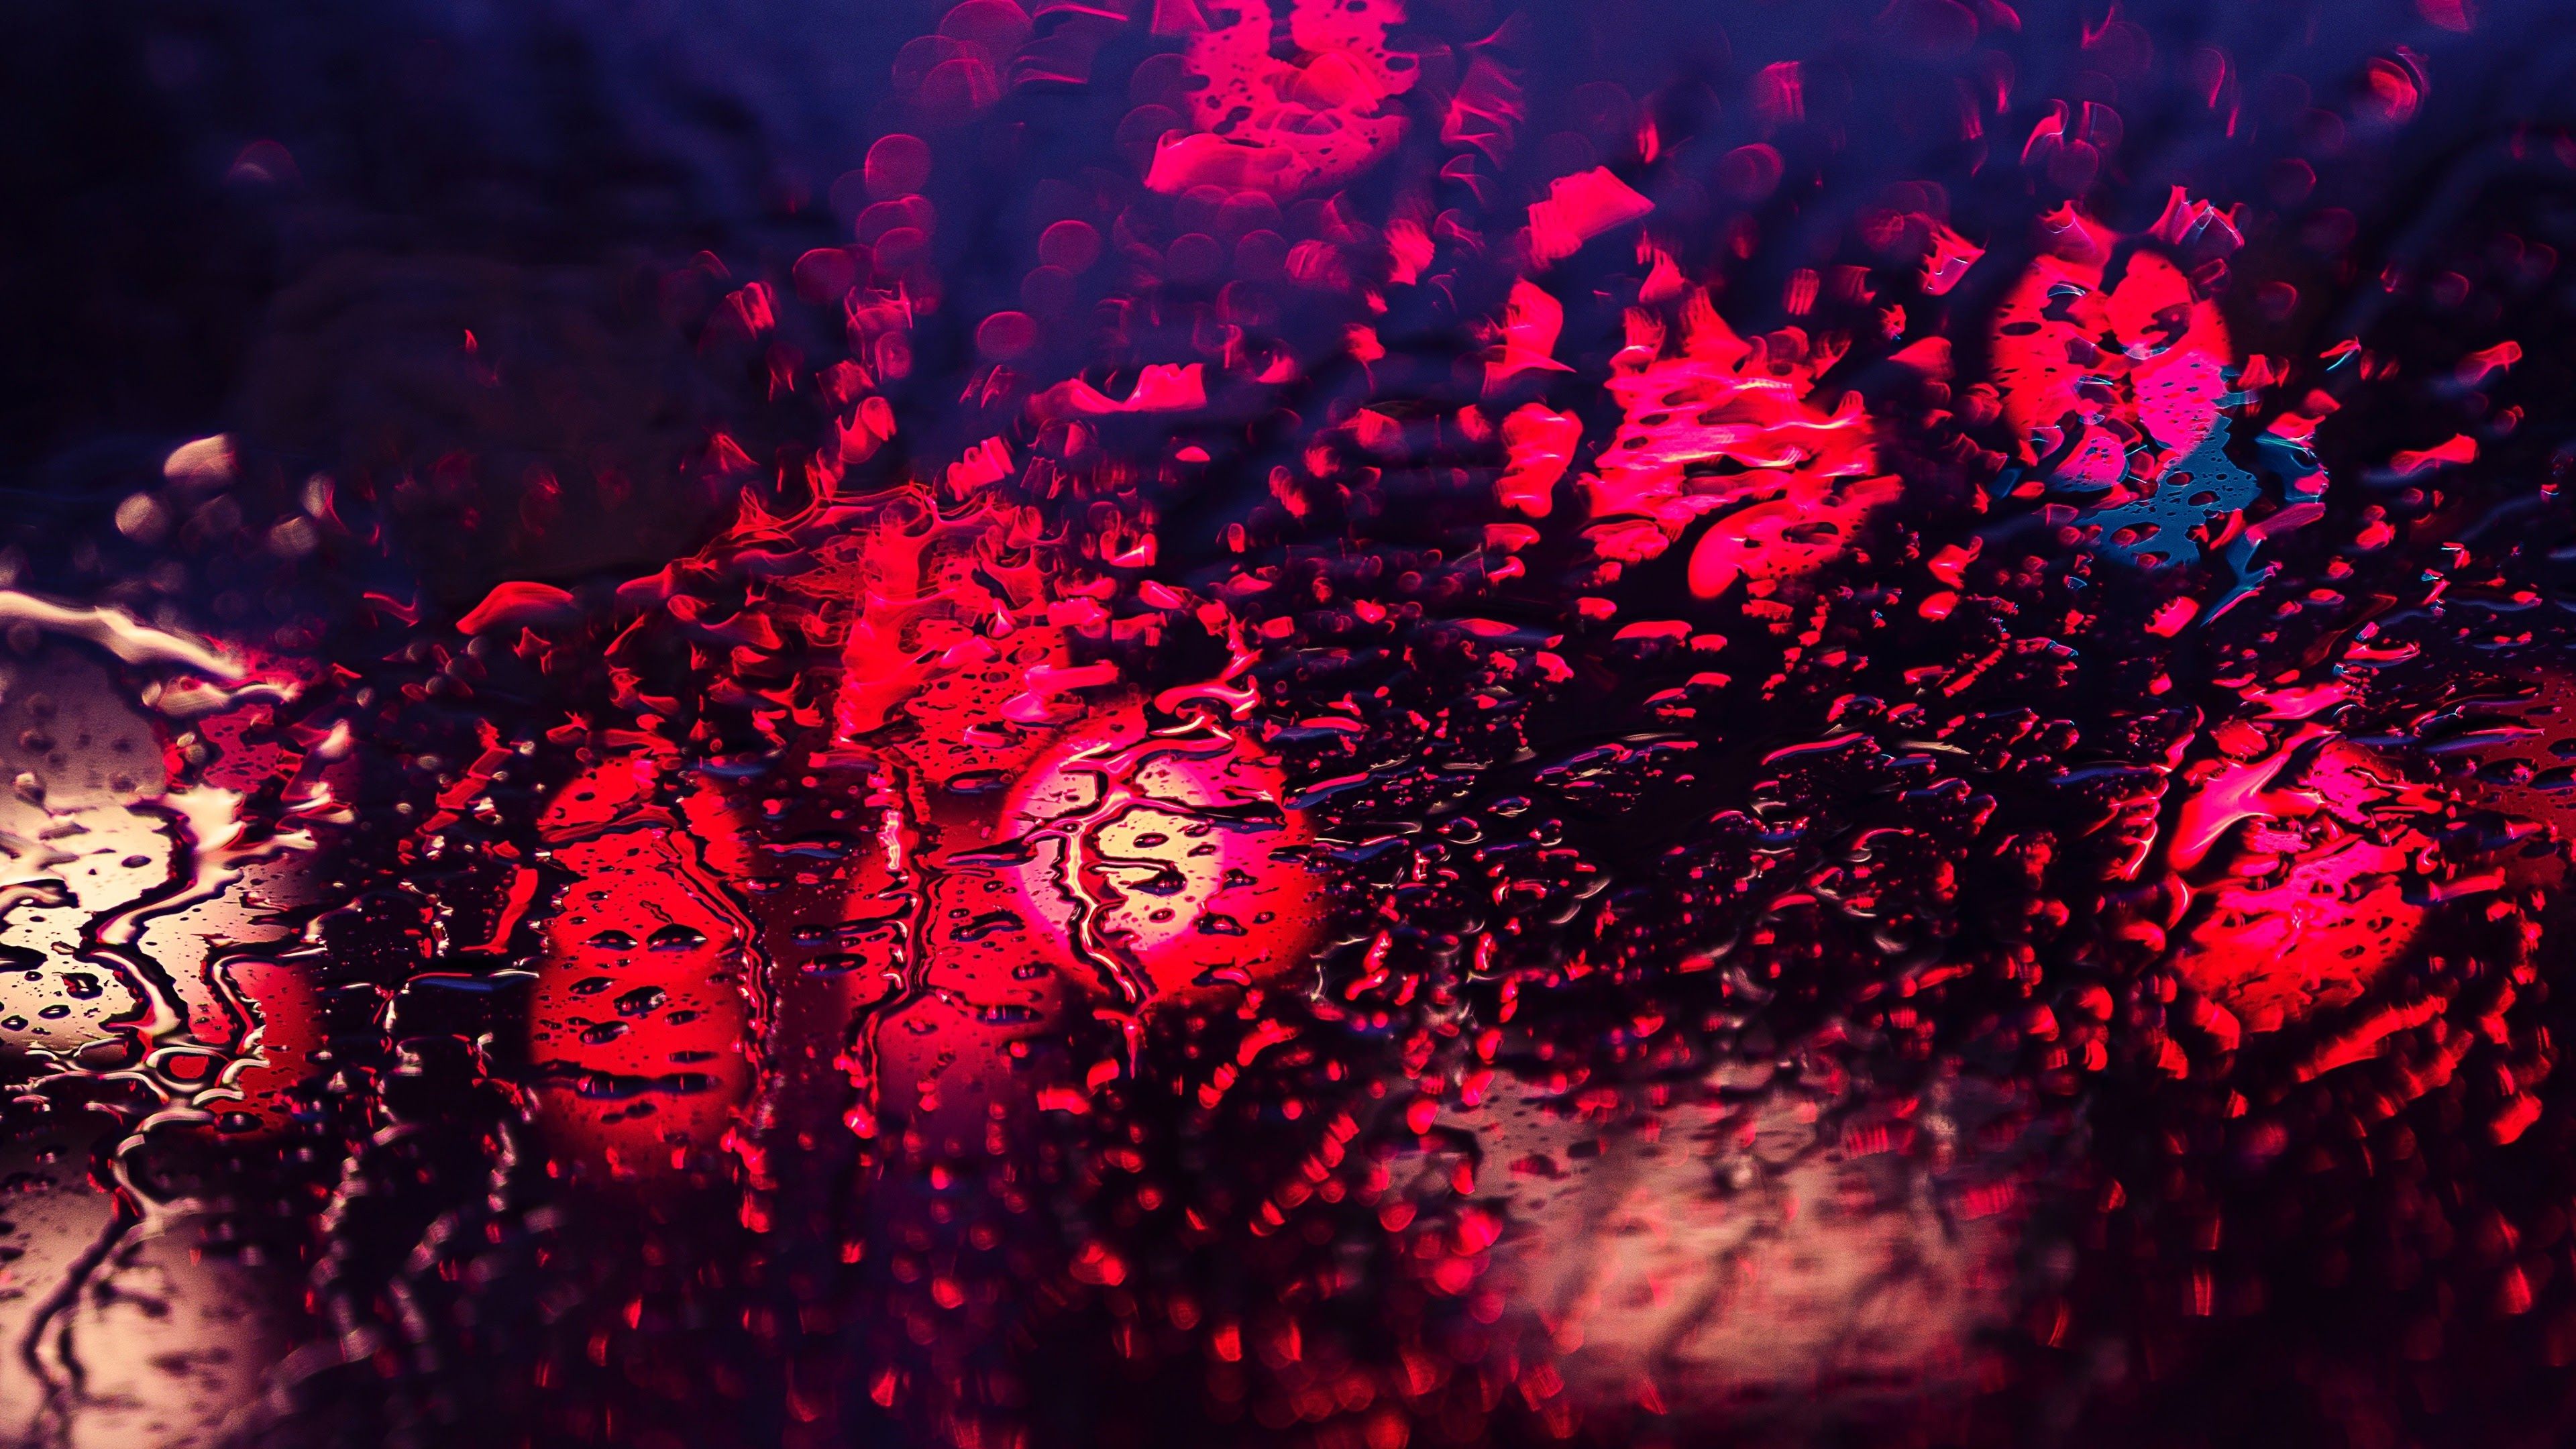 Free download 4k Wallpaper Red Lights Cold Rain Drops Window UHD Image [3840x2160] for your Desktop, Mobile & Tablet. Explore Daniel Kaluuya Wallpaper. Daniel Kaluuya Wallpaper, Daniel Radcliffe Wallpaper